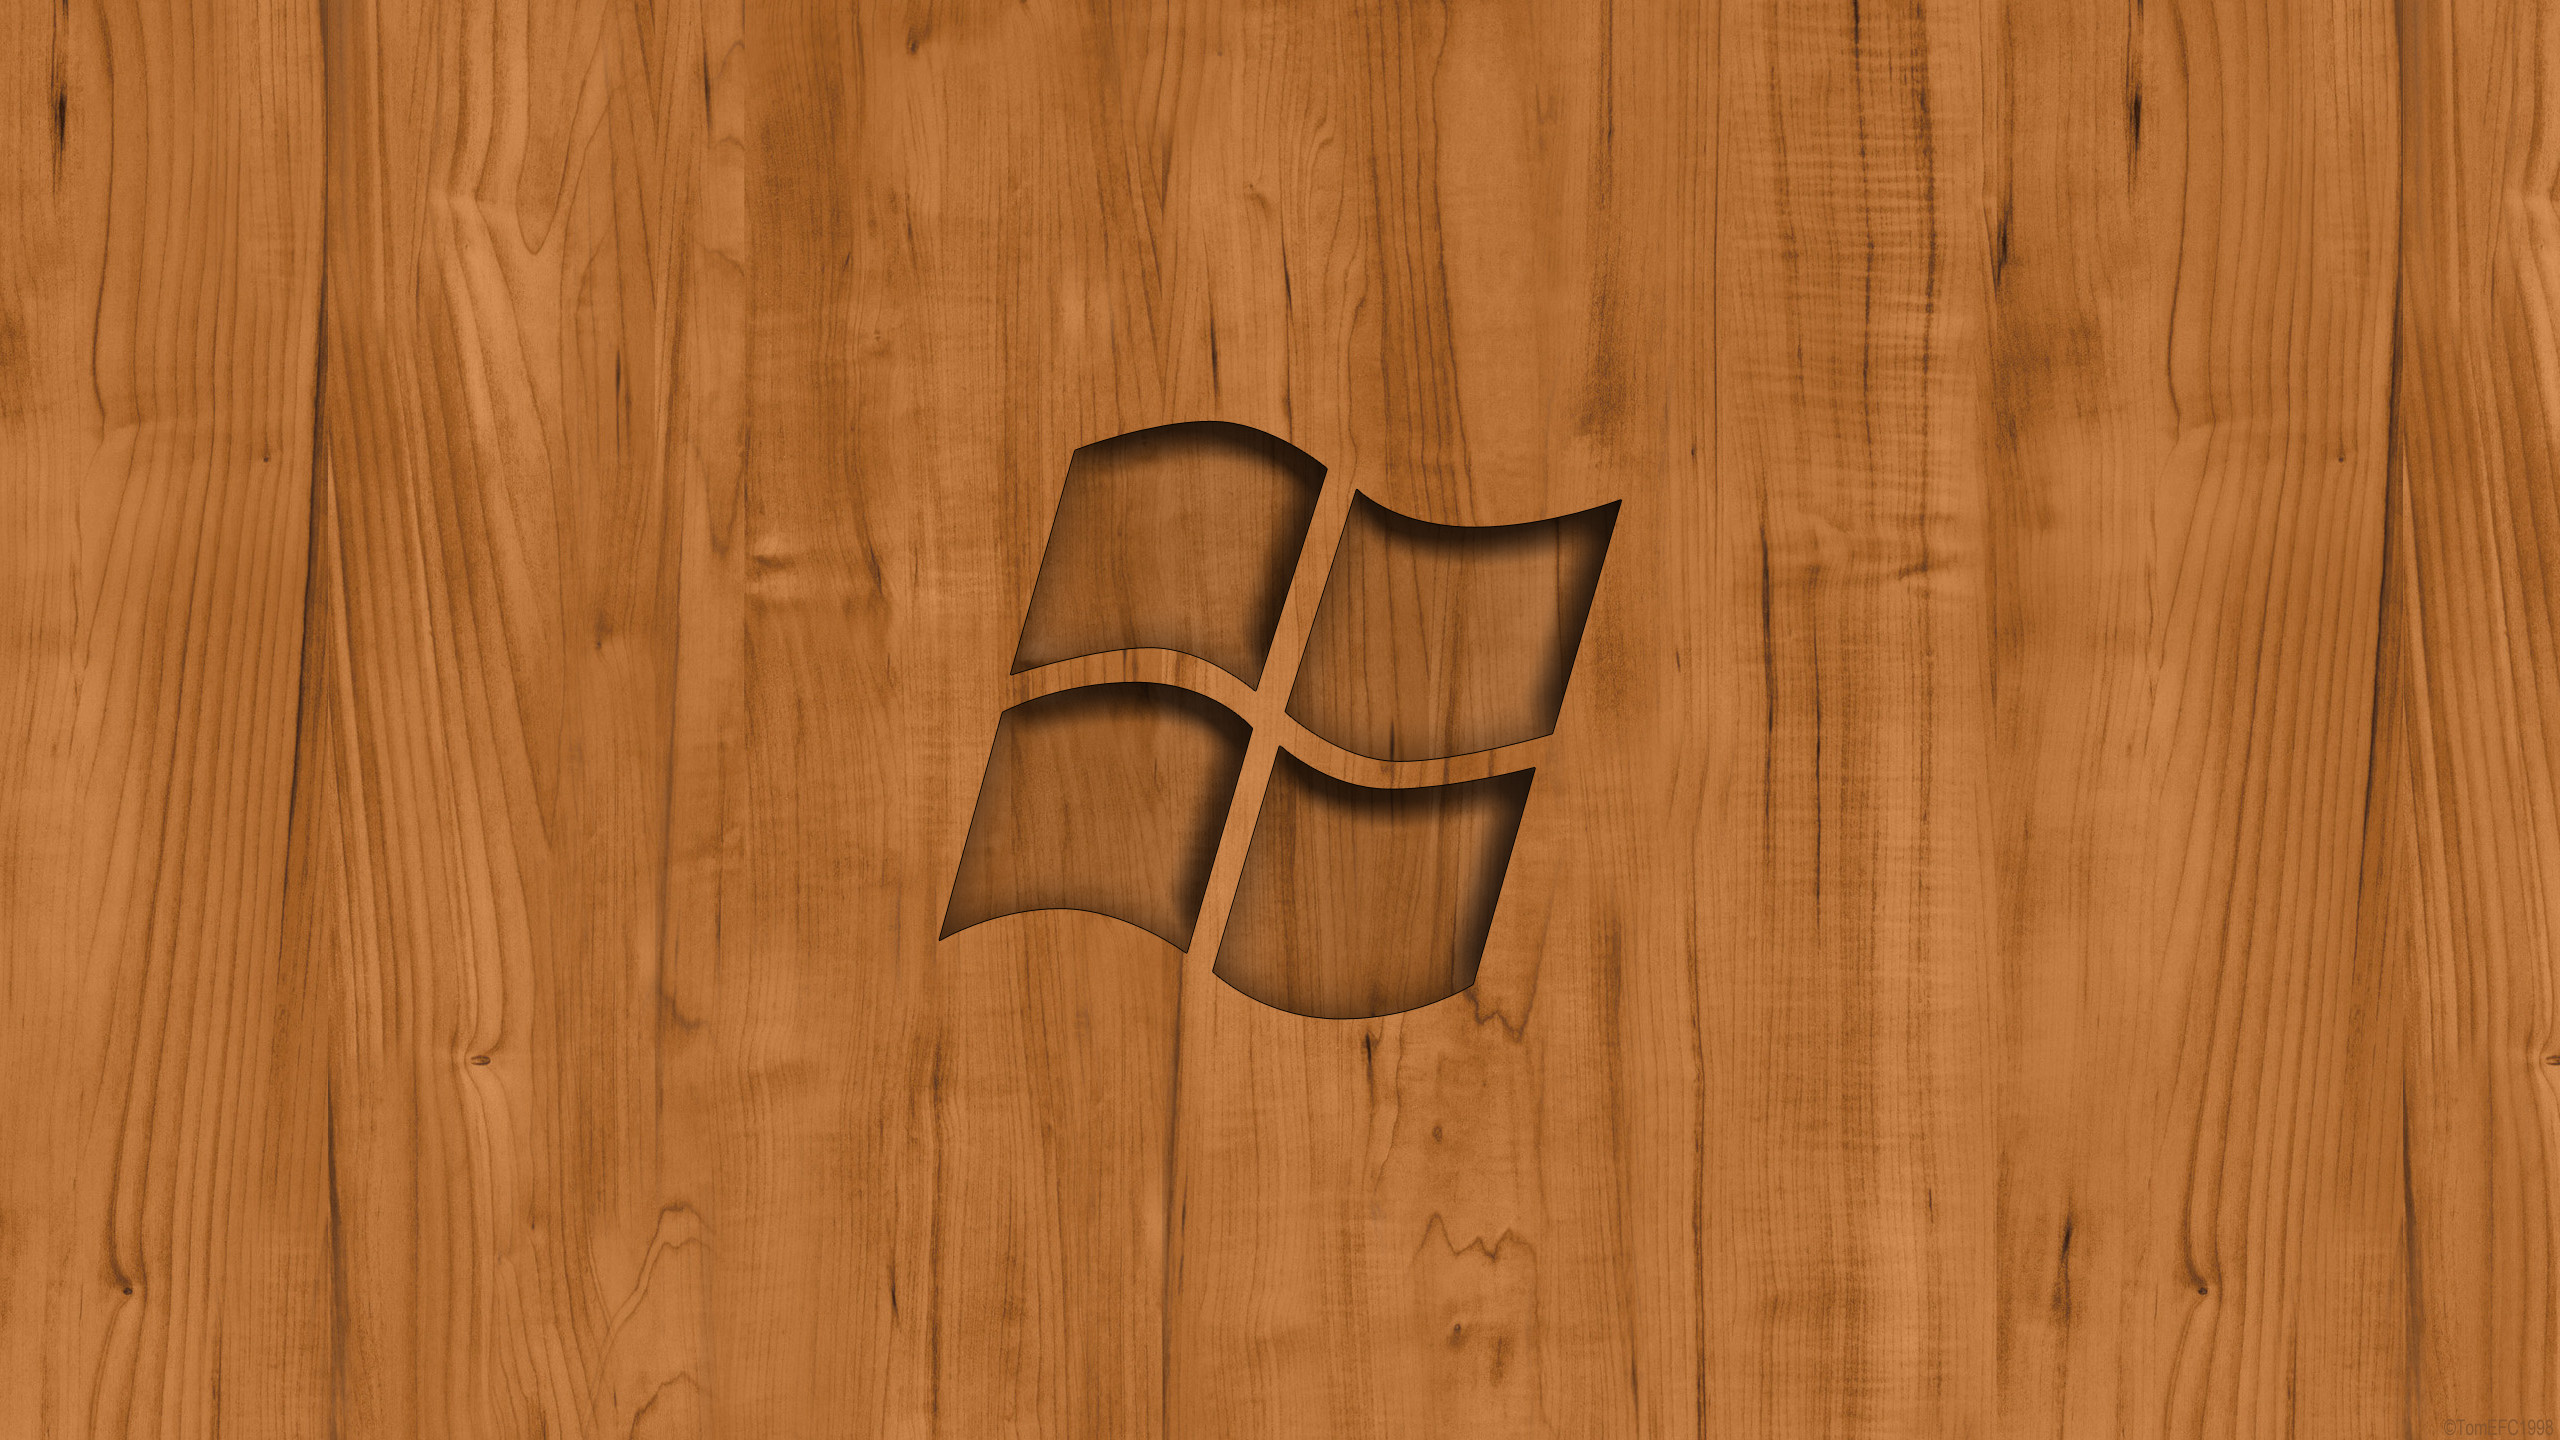 2560x1440 Windows Wood Wallpaper by TomEFC98 on DeviantArt